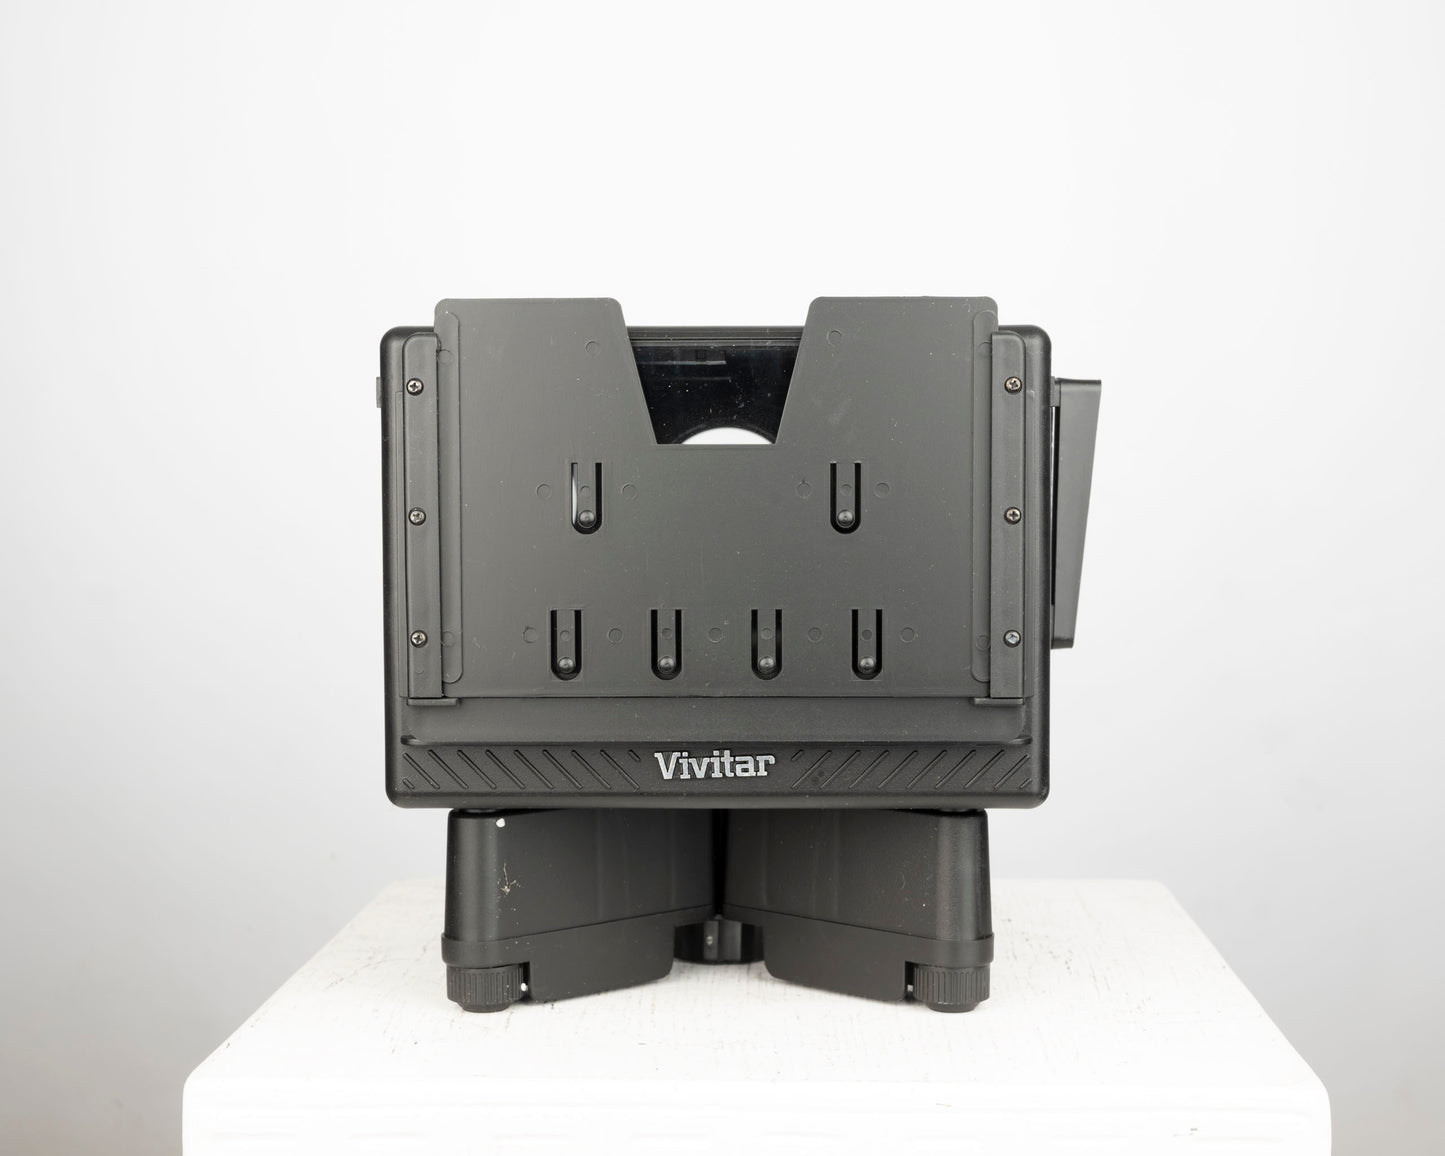 Vivitar UVC-1 Universal Slide/Movie/4x6" Print capture unit w/ original box + accessories